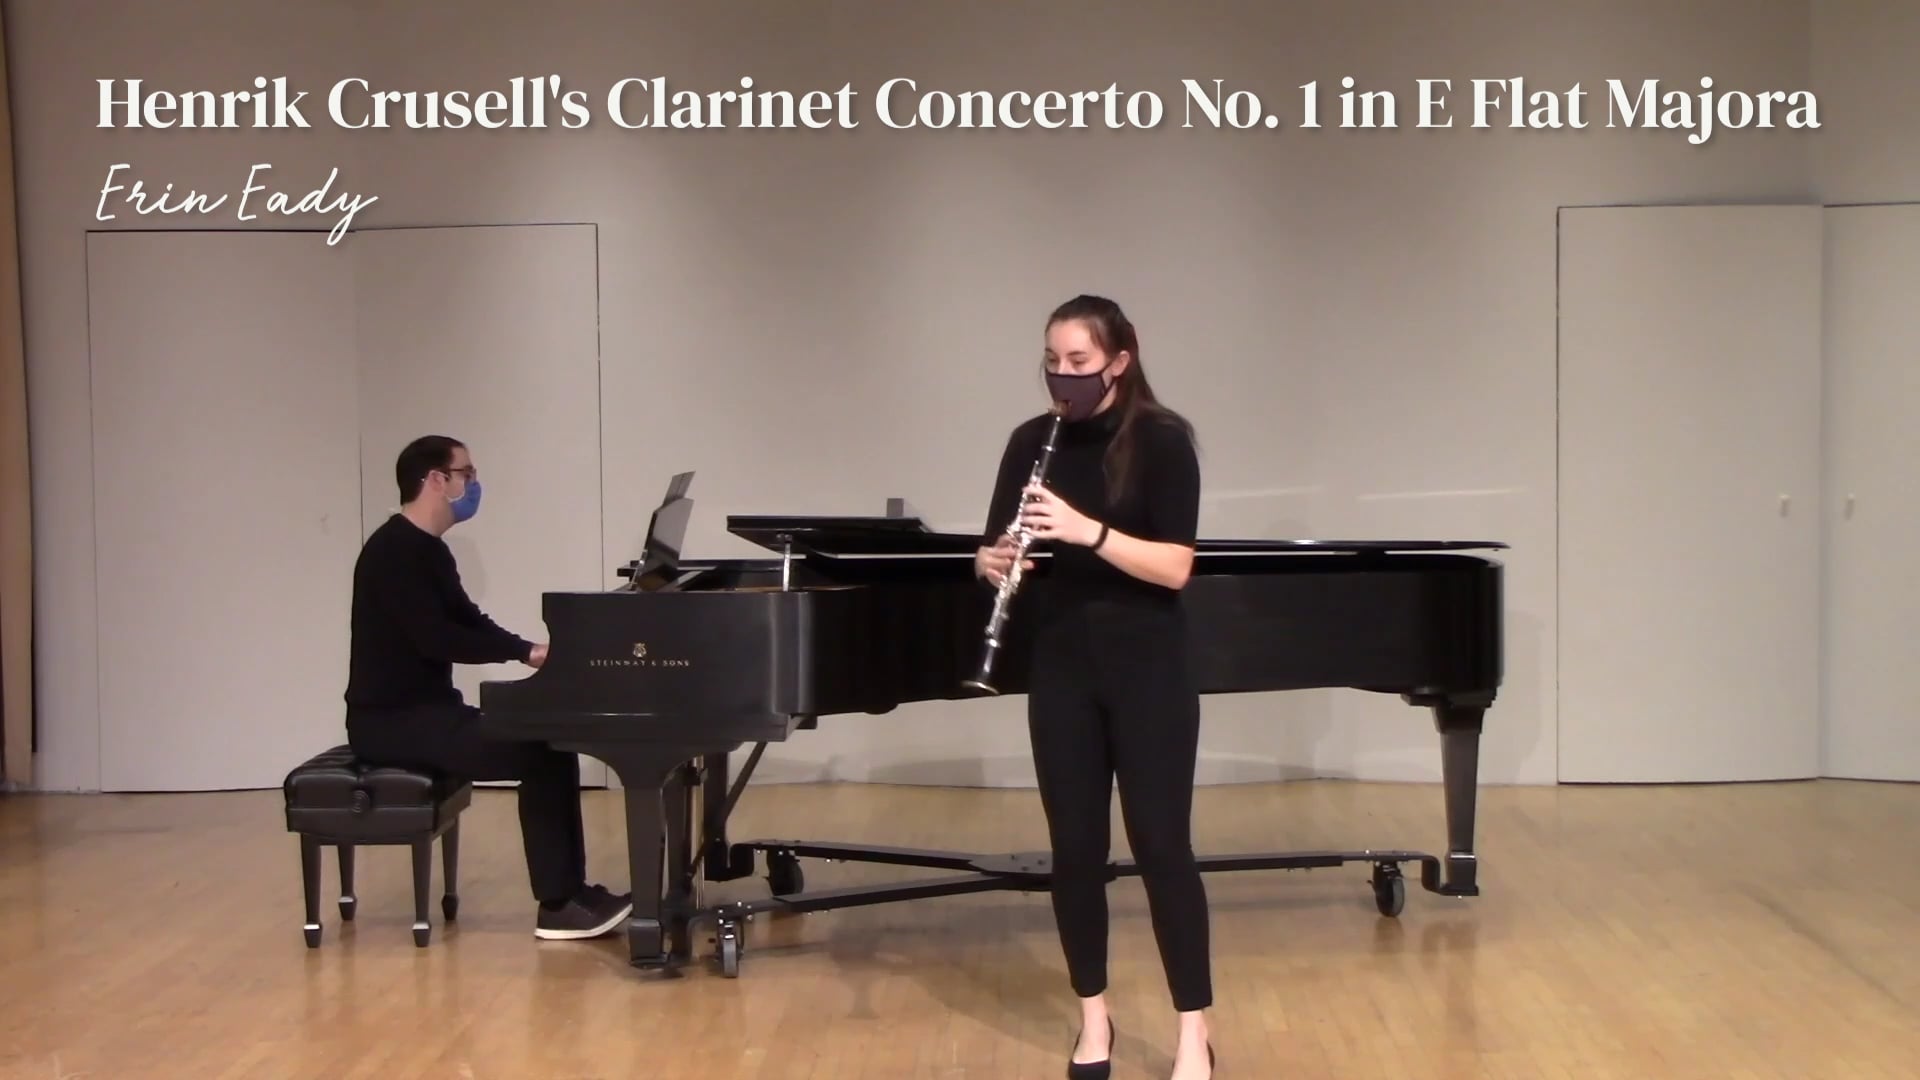 Henrik Crusell's Clarinet Concerto No. 1 in E Flat Majora by Erin Eady